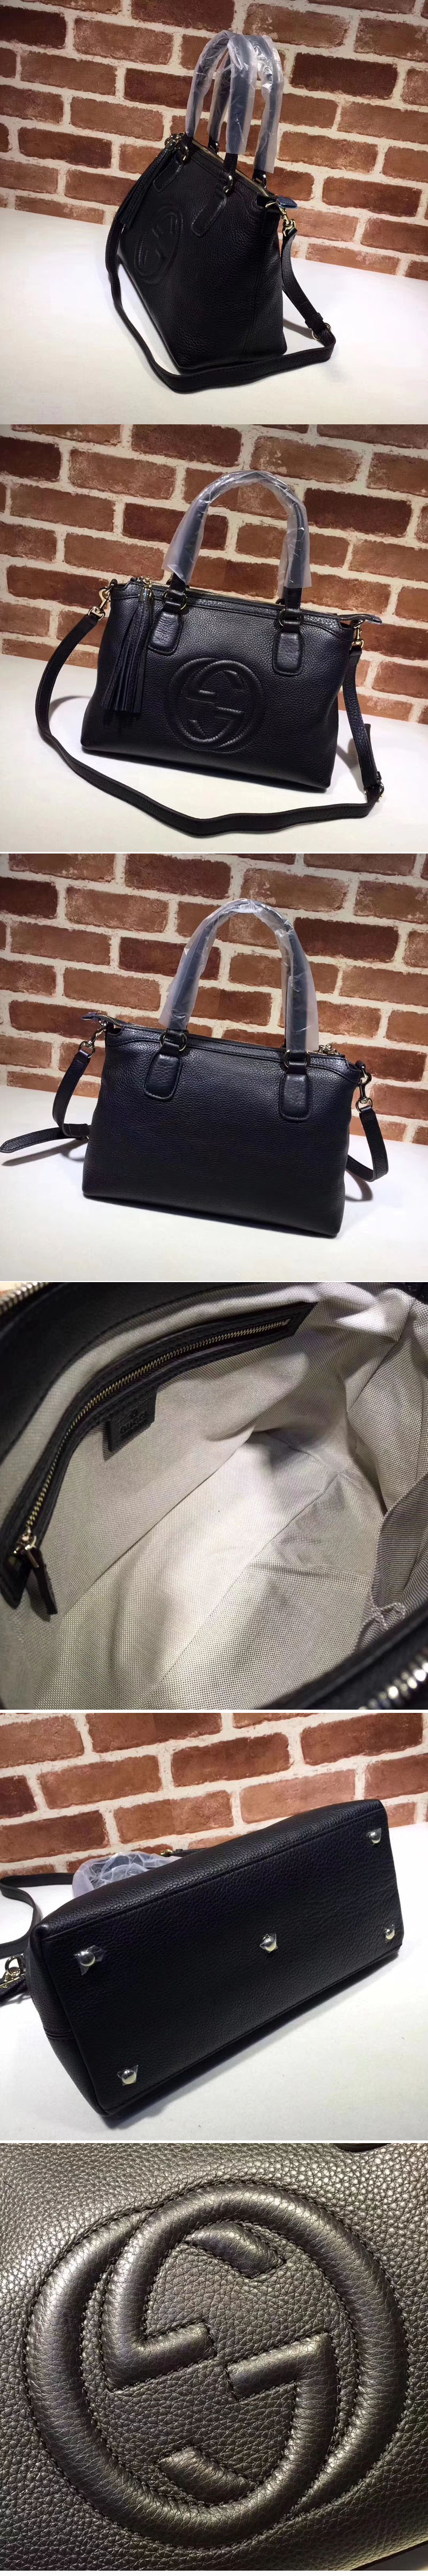 Replica Gucci 308362 Calf Leather Soho Top Handle Bags Black